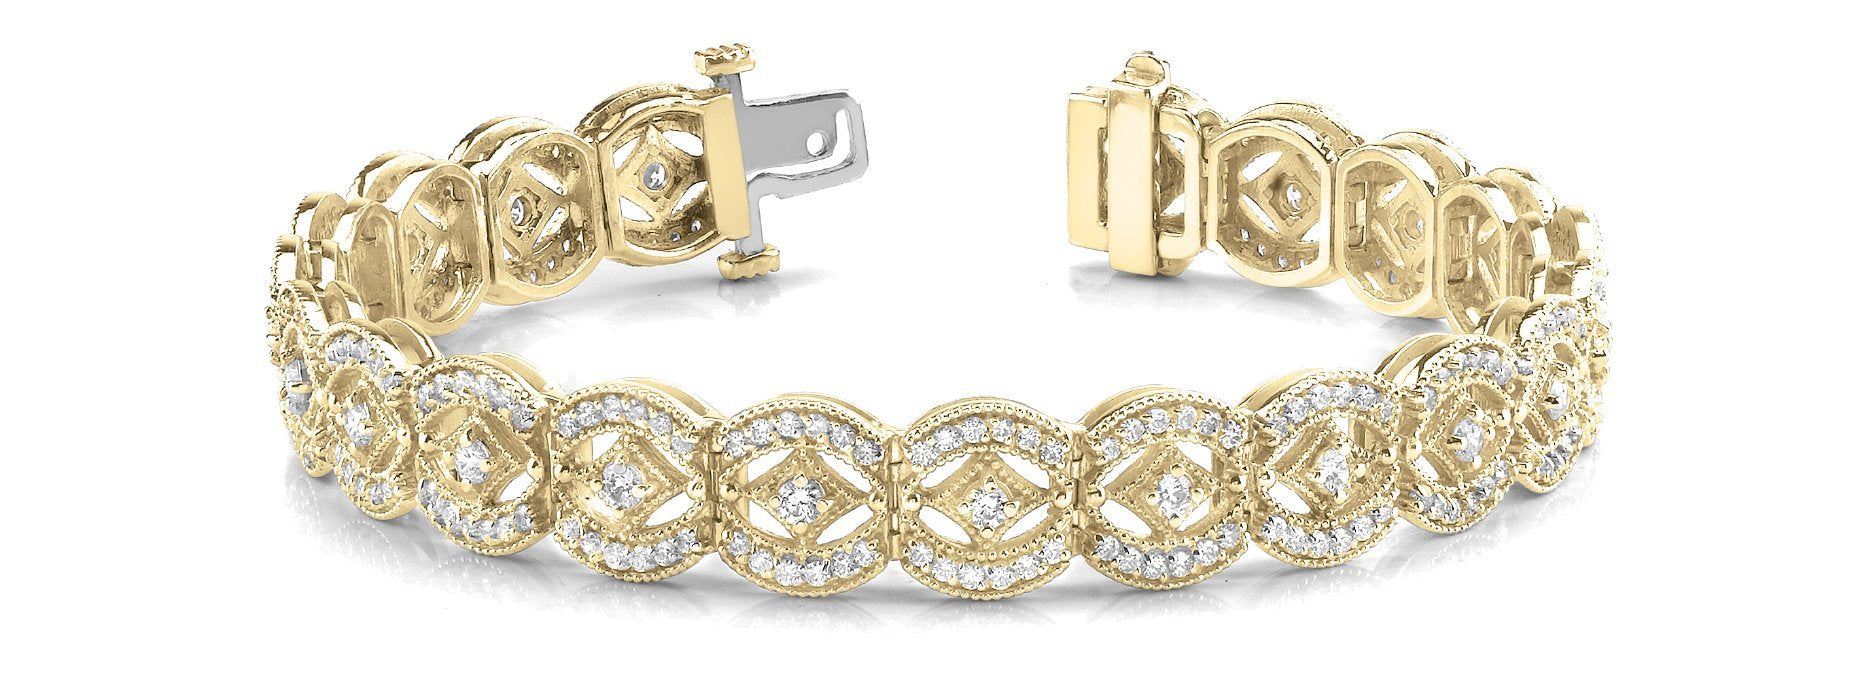 Fancy Diamond Bracelet Ladies 3.74ct tw - 14kt Gold